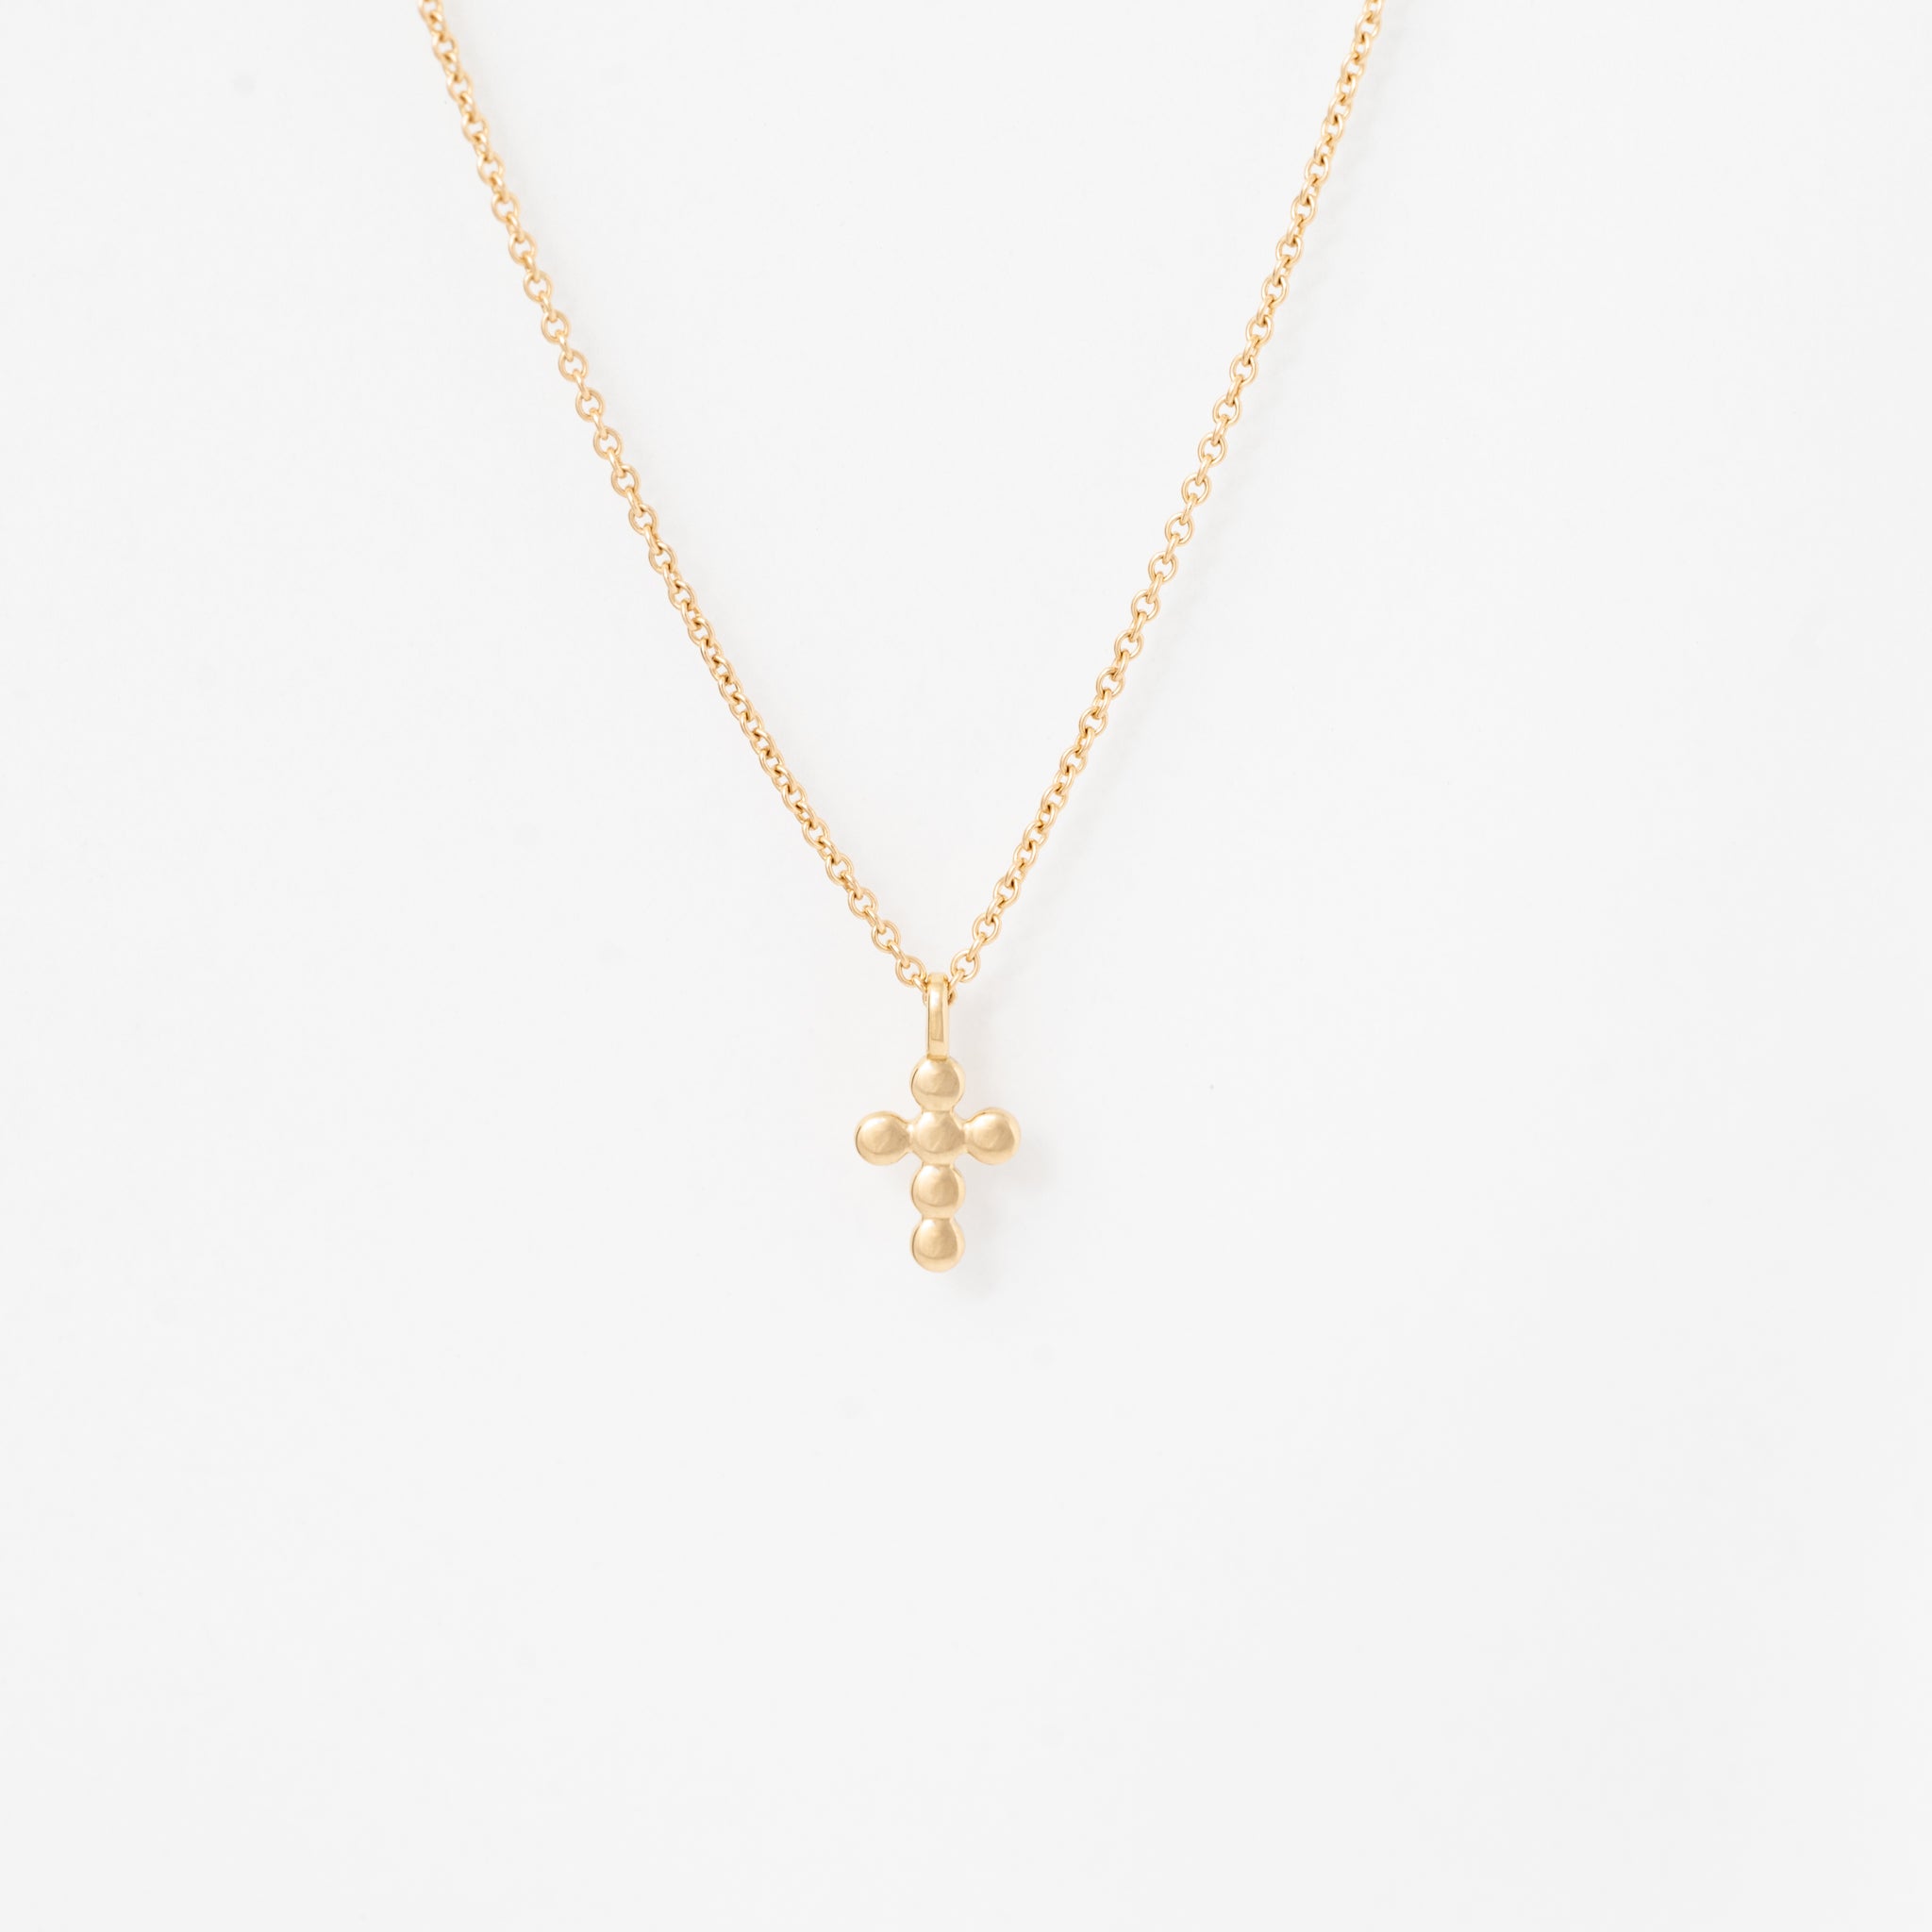 The Mini Beaded Cross Necklace